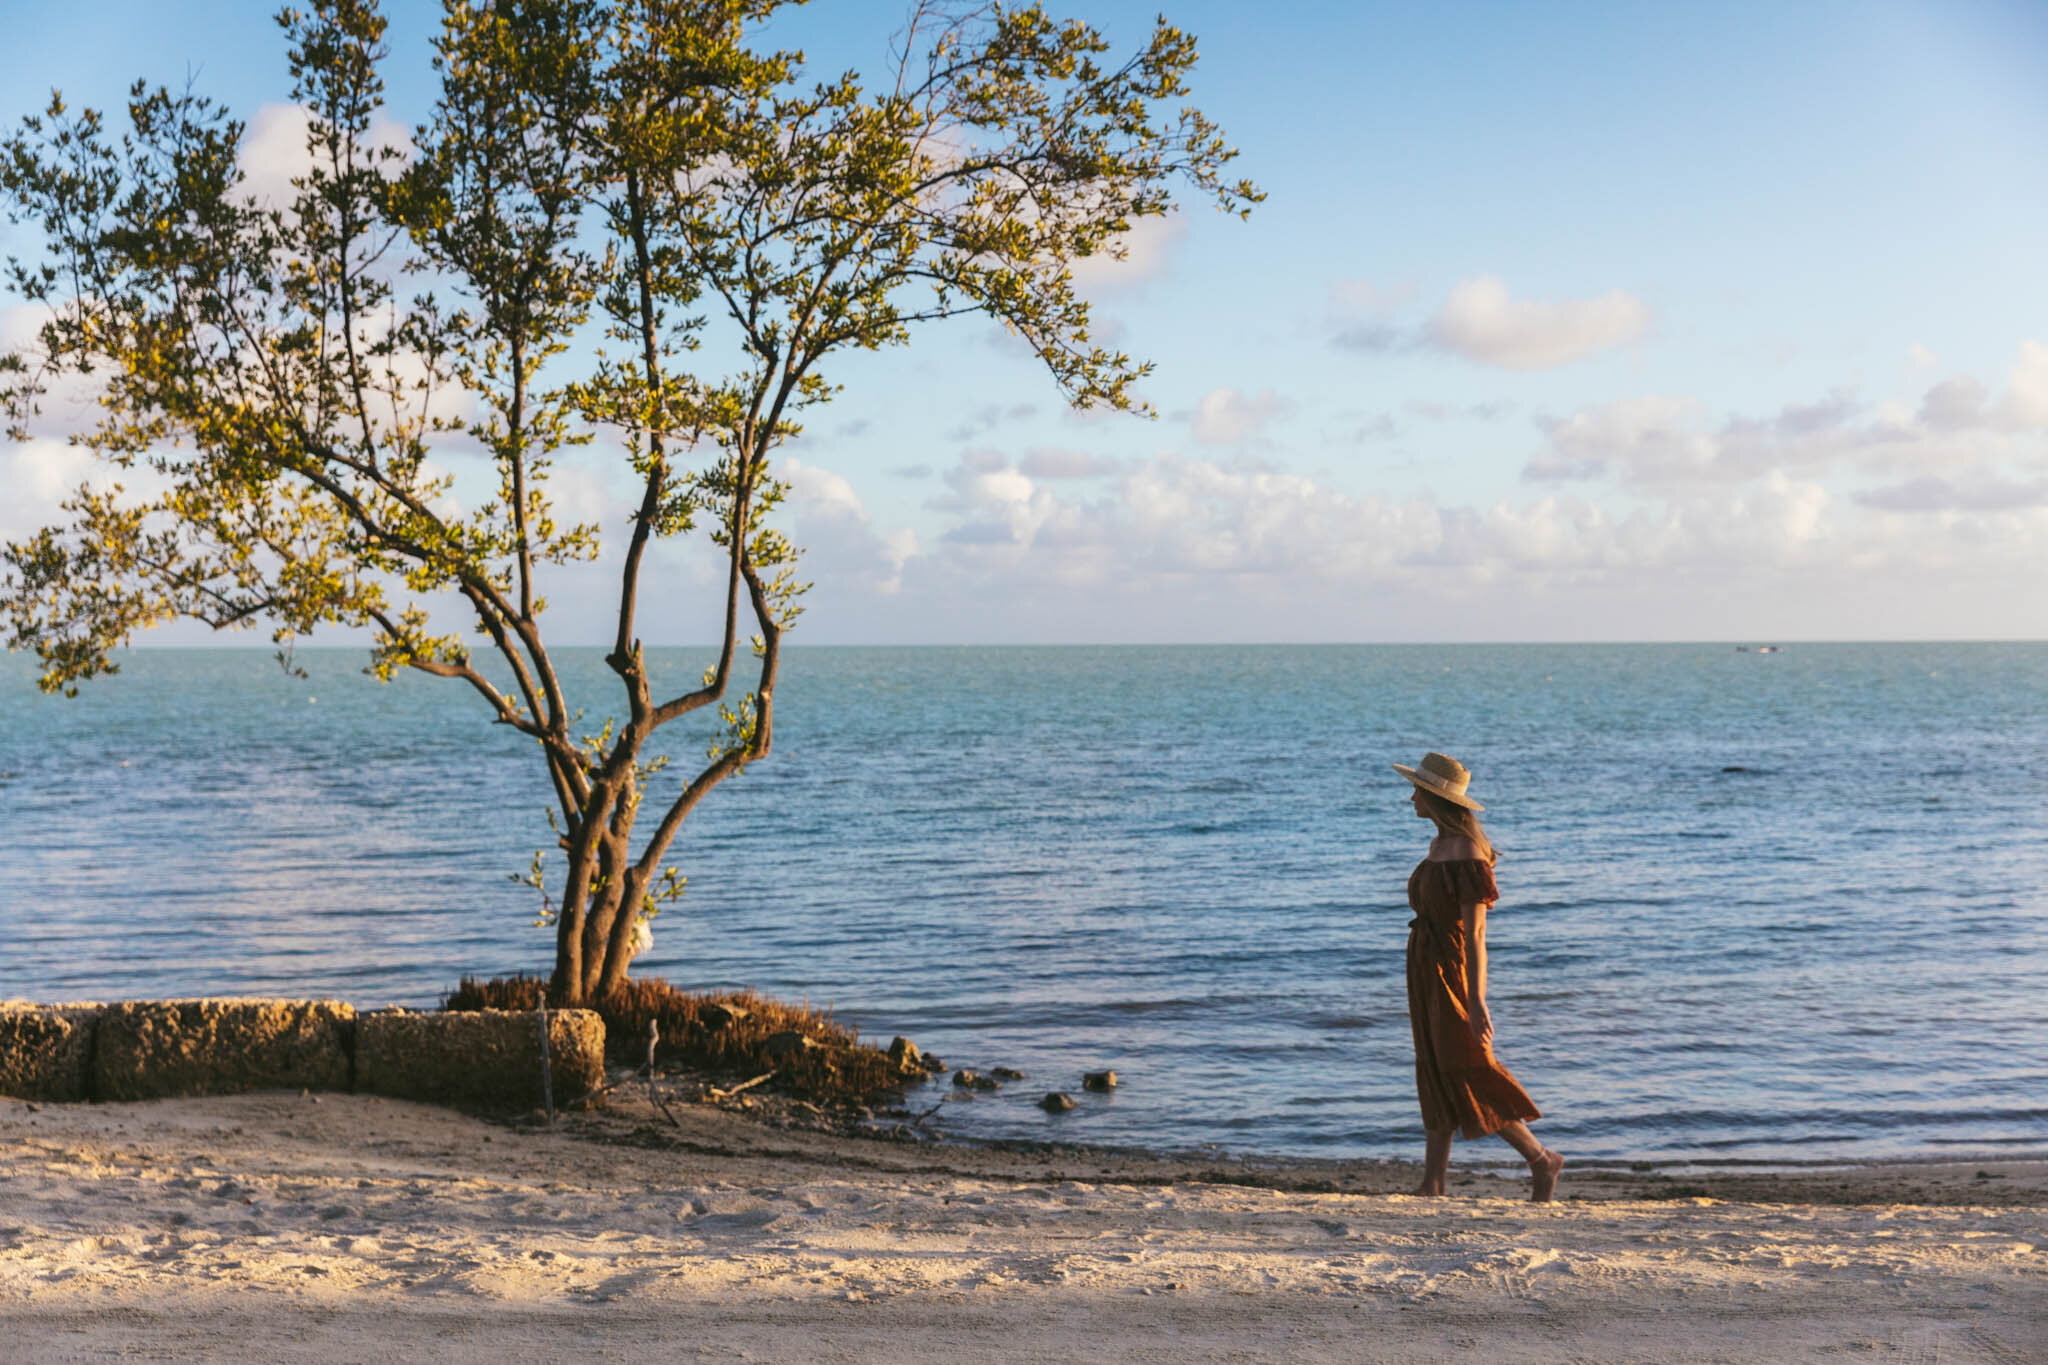 islamorada-beach-tree-woman-walking-sand.jpg